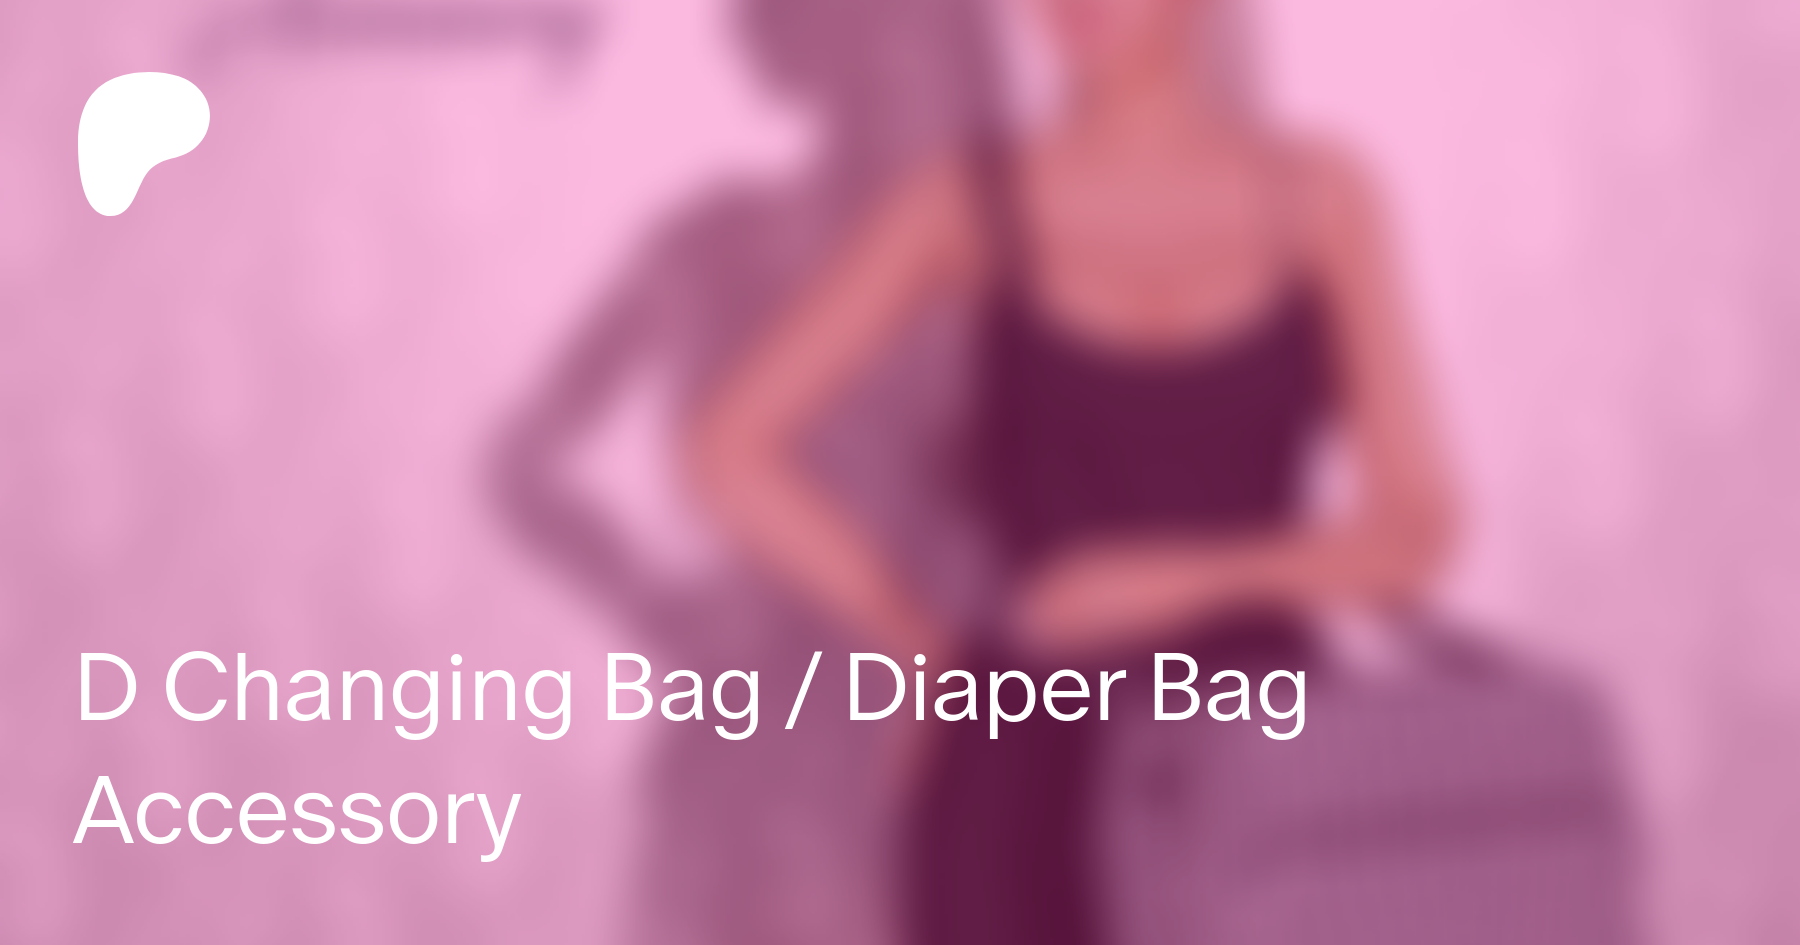 PlatinumLuxeSims — Dior Changing Bag / Diaper Bag Accessory • 5